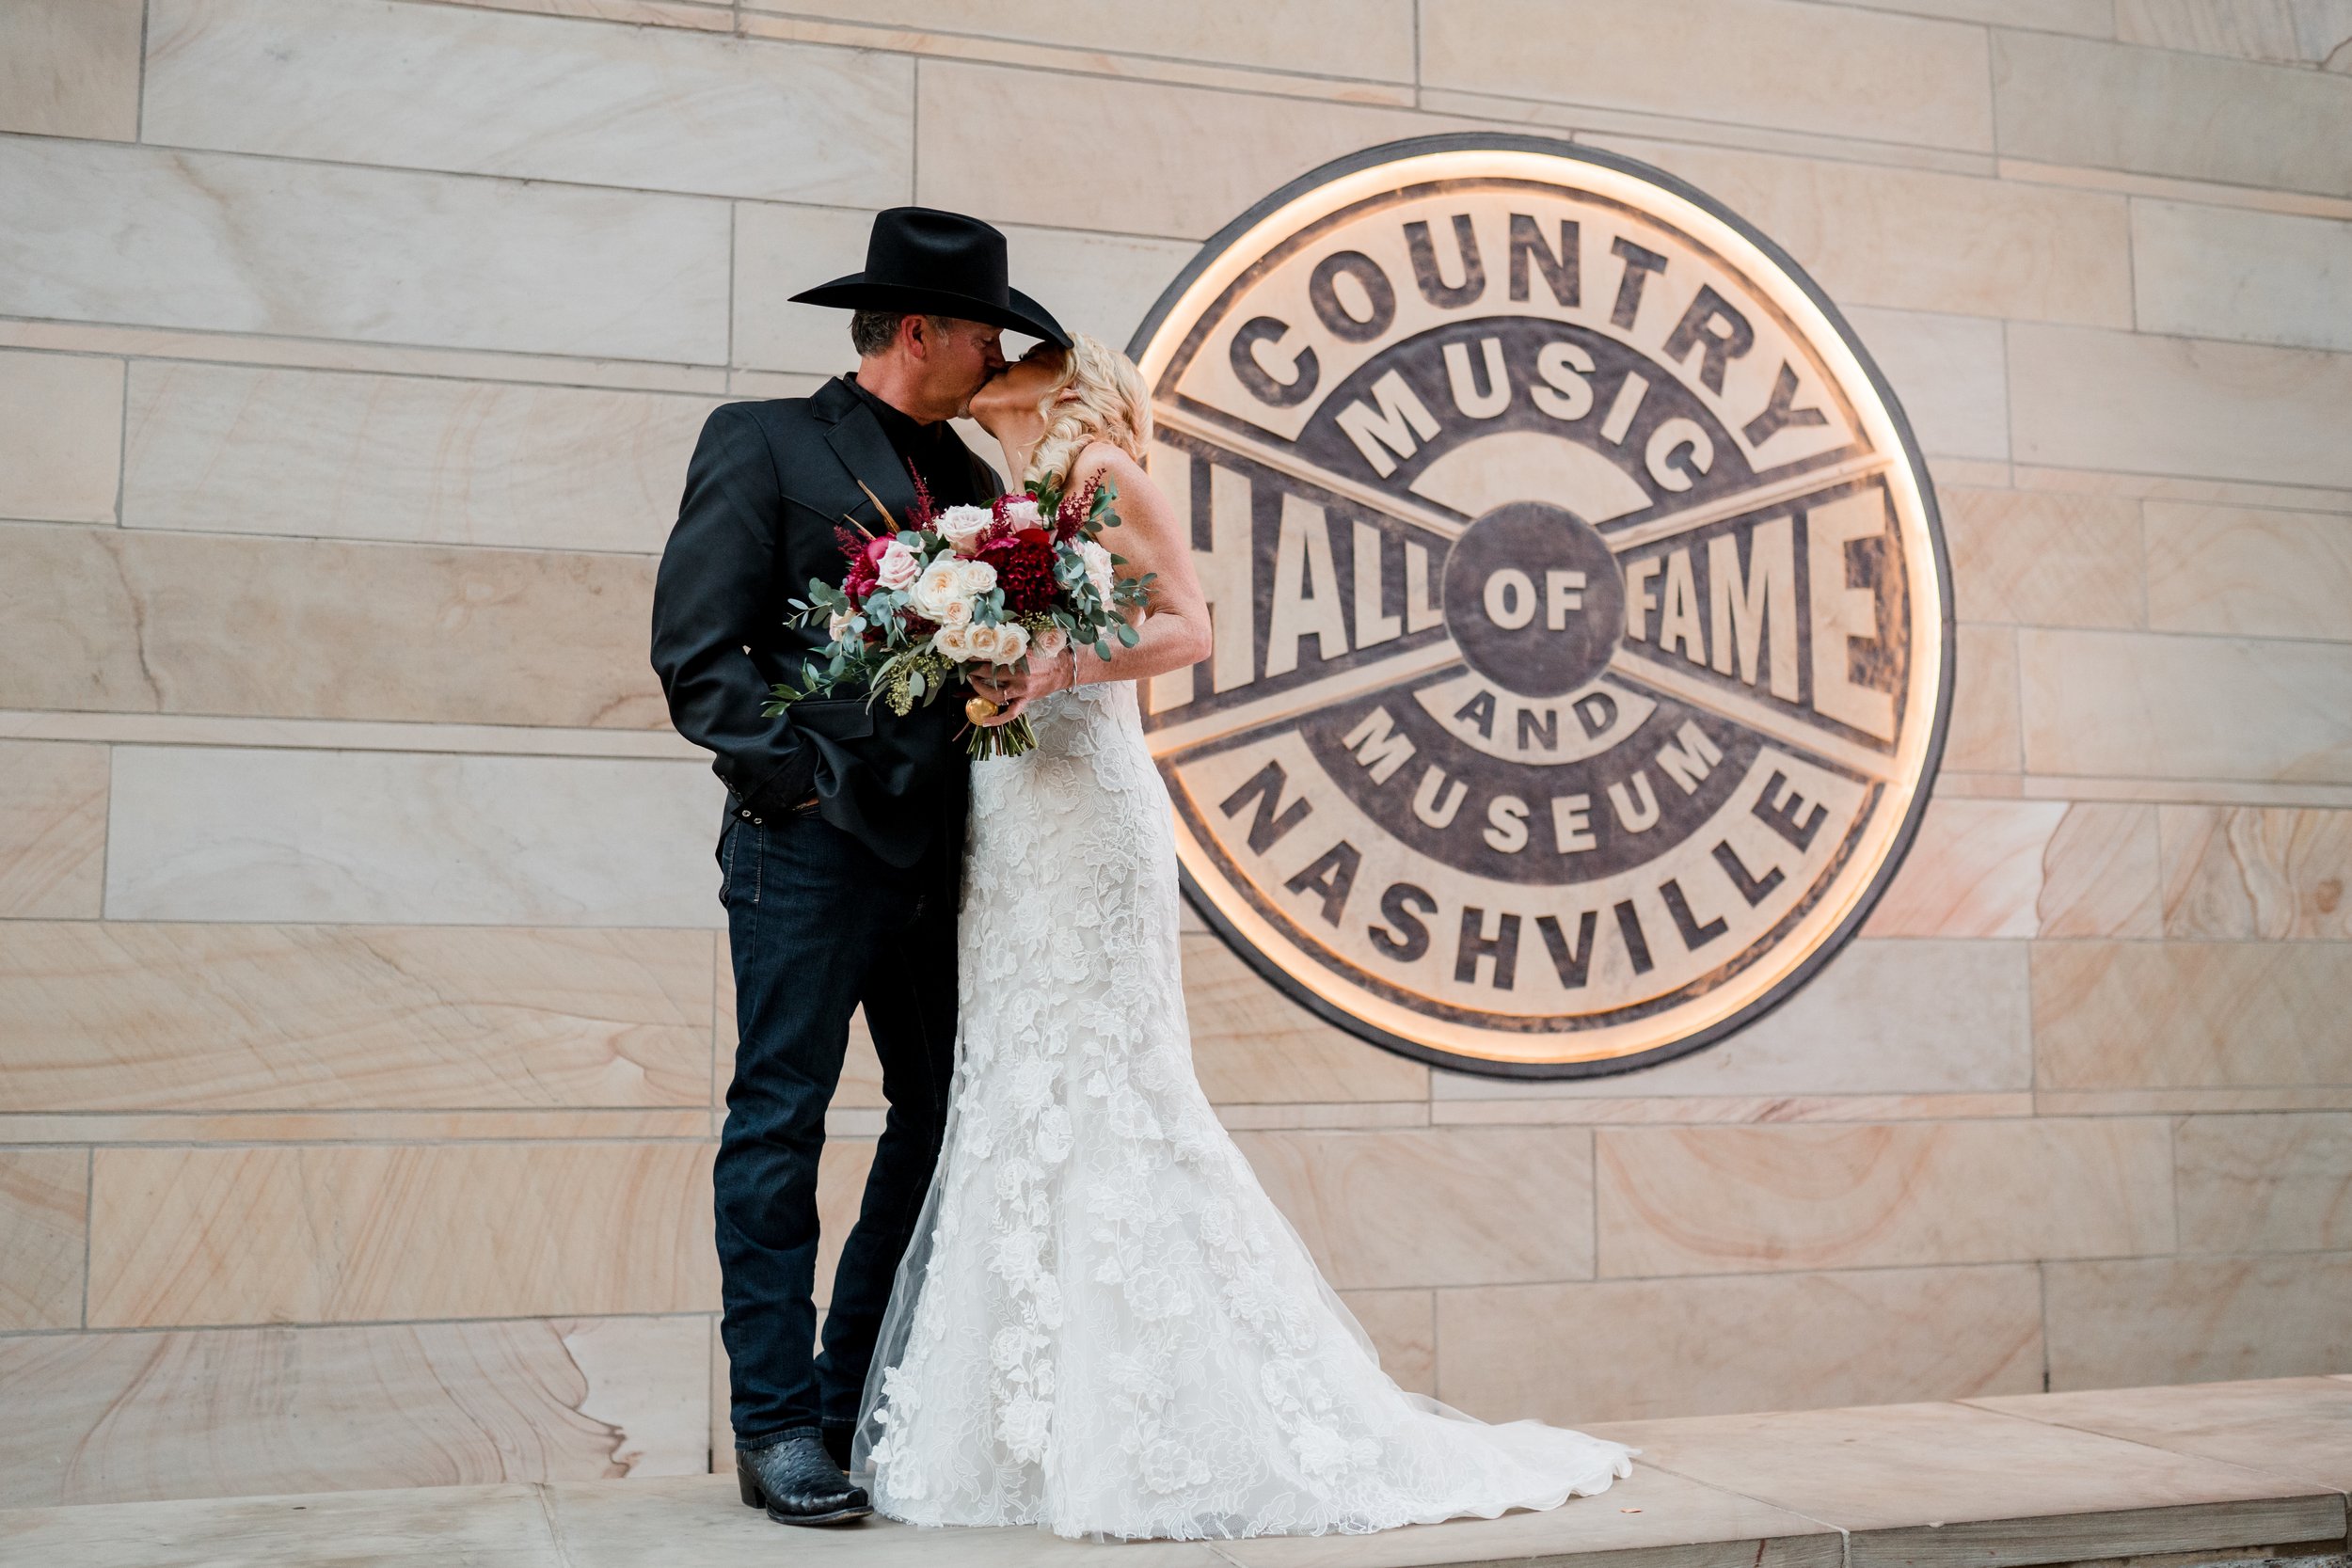 Country Music Hall of Fame Nashville Wedding-1.jpg